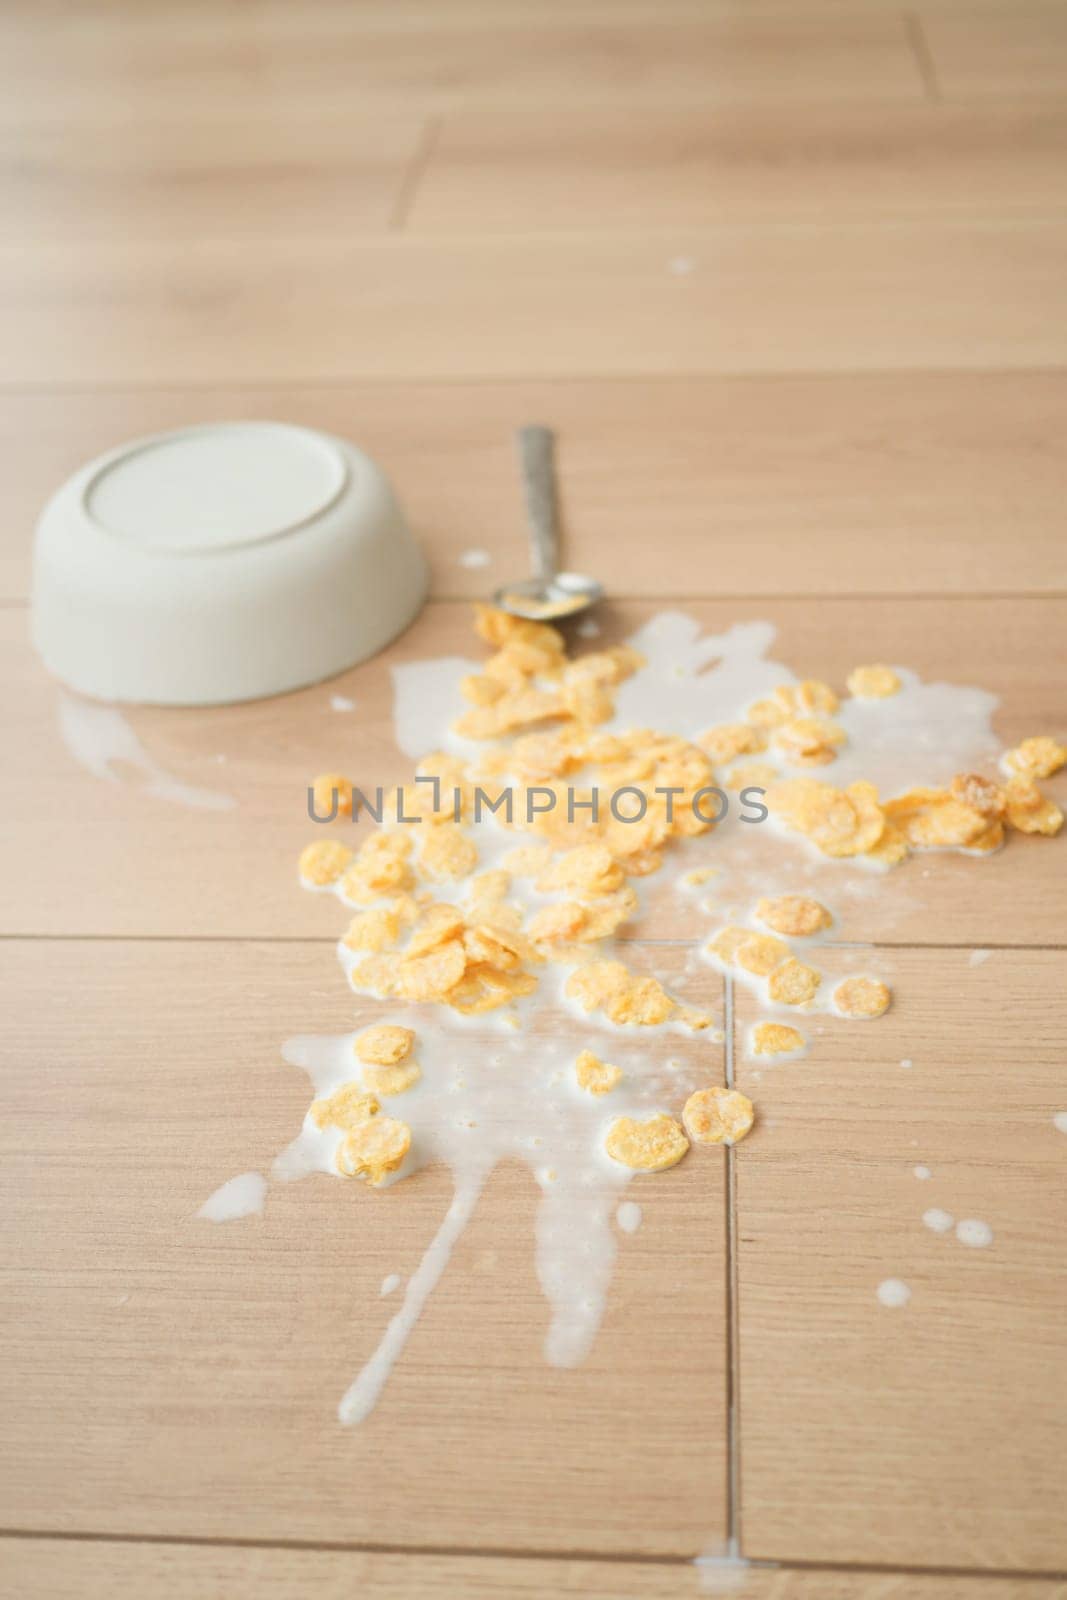 Spilled breakfast cereal on floor